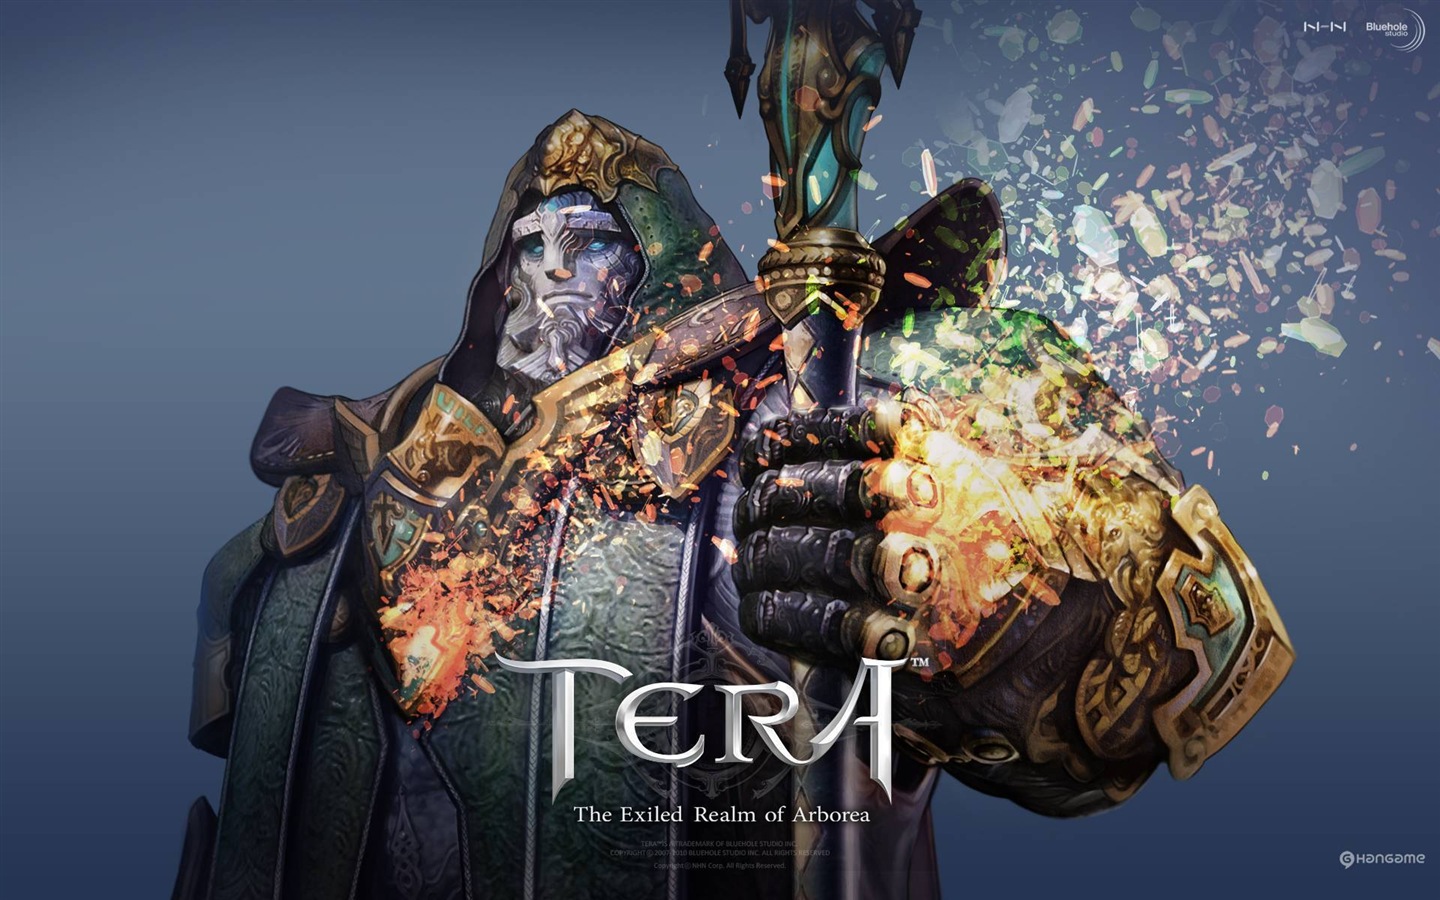 Tera HD game wallpapers #17 - 1440x900